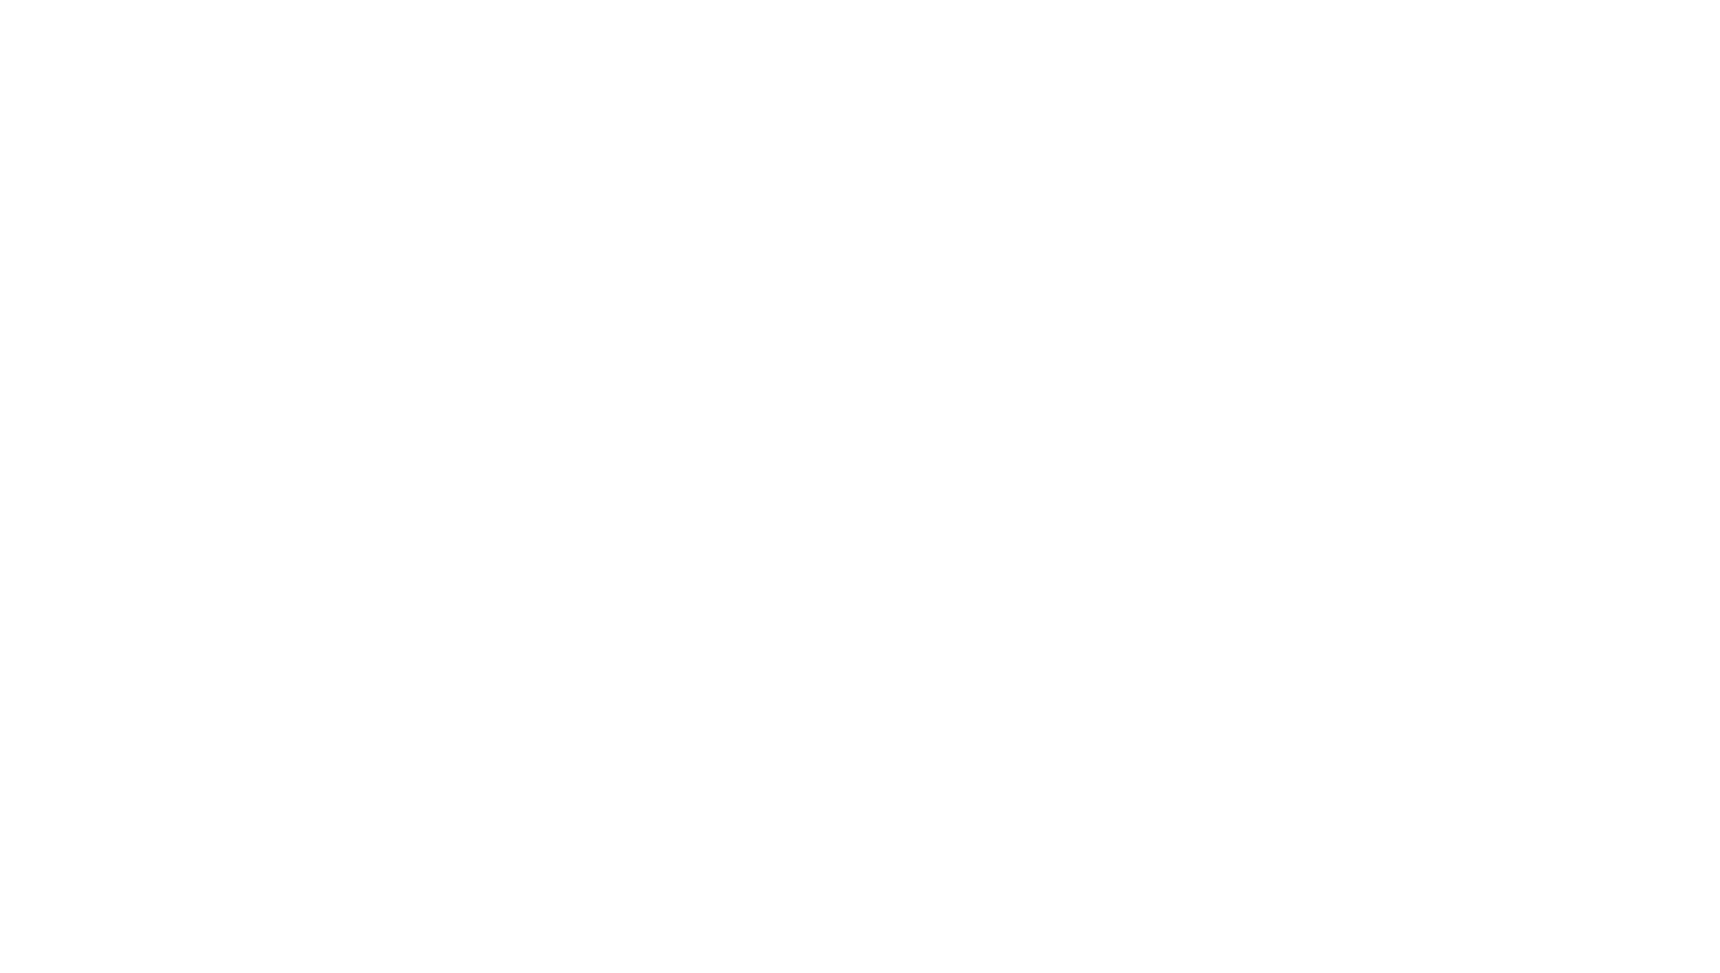 Lupiccino Lupinenkaffee